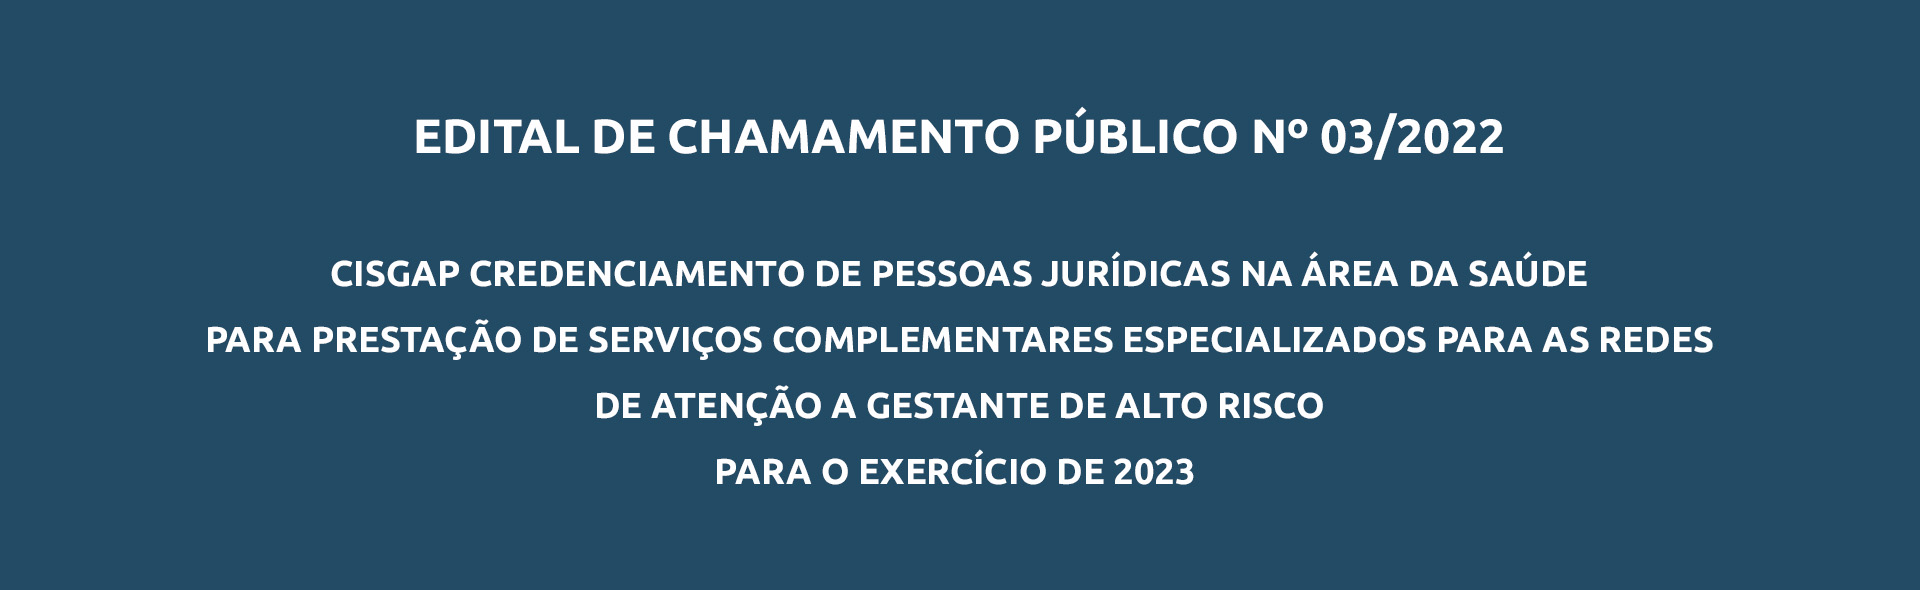 EDITAL DE CHAMAMENTO PBLICO N 03/2022 - CISGAP